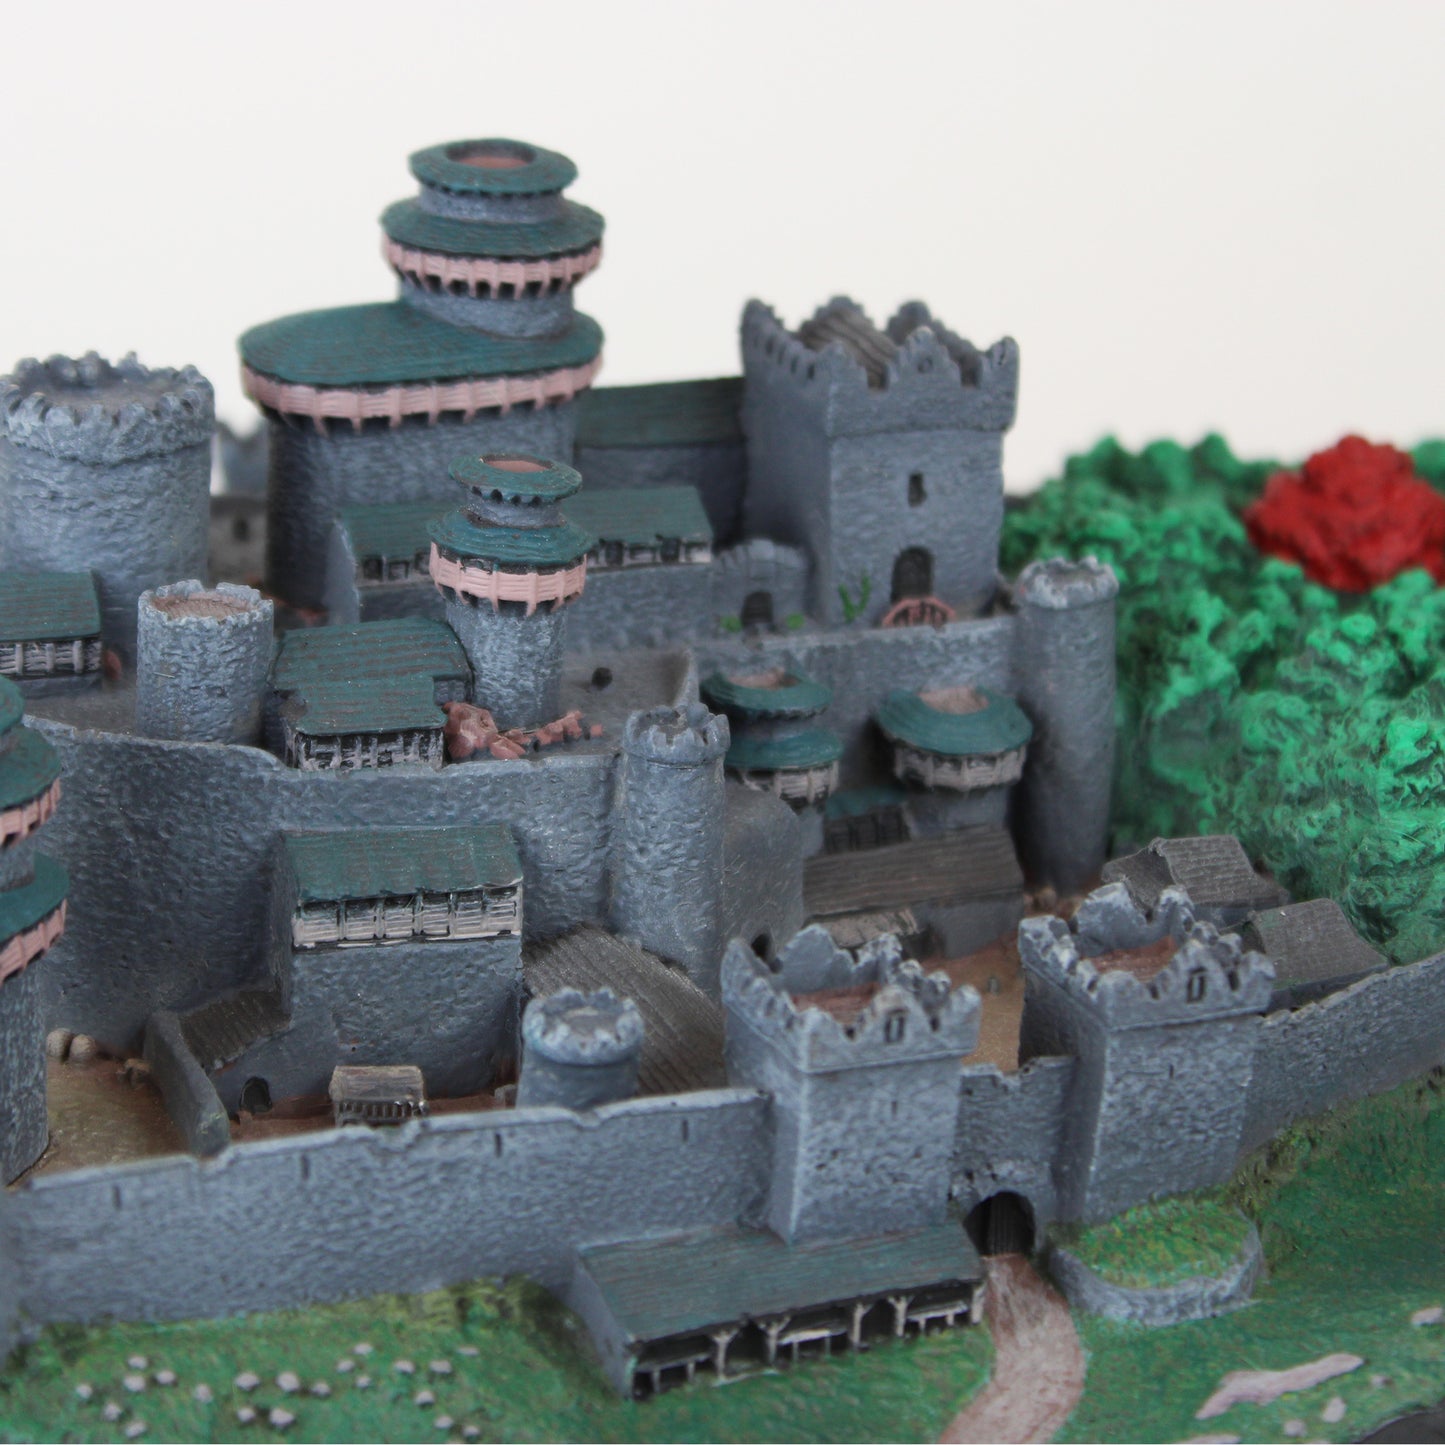 Game of Thrones "Castle Winterfell" Desktop Sculpture